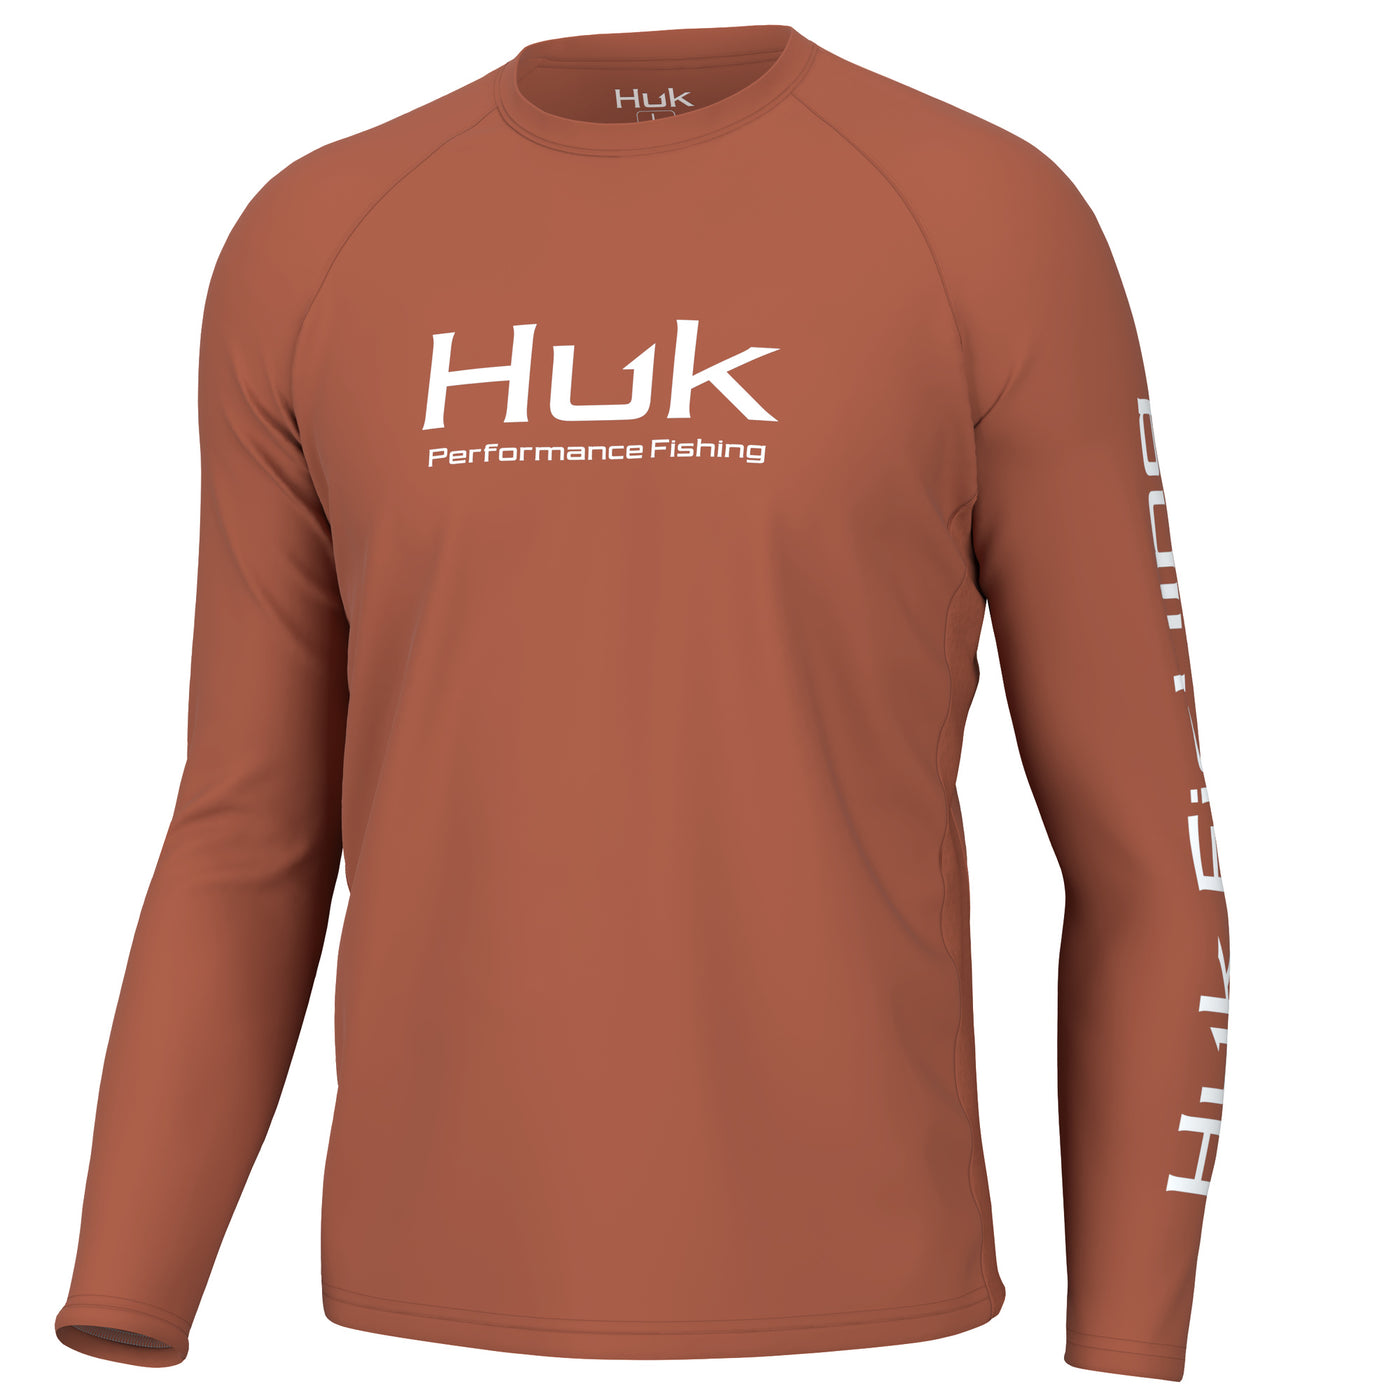 Huk Pursuit Performance Shirt